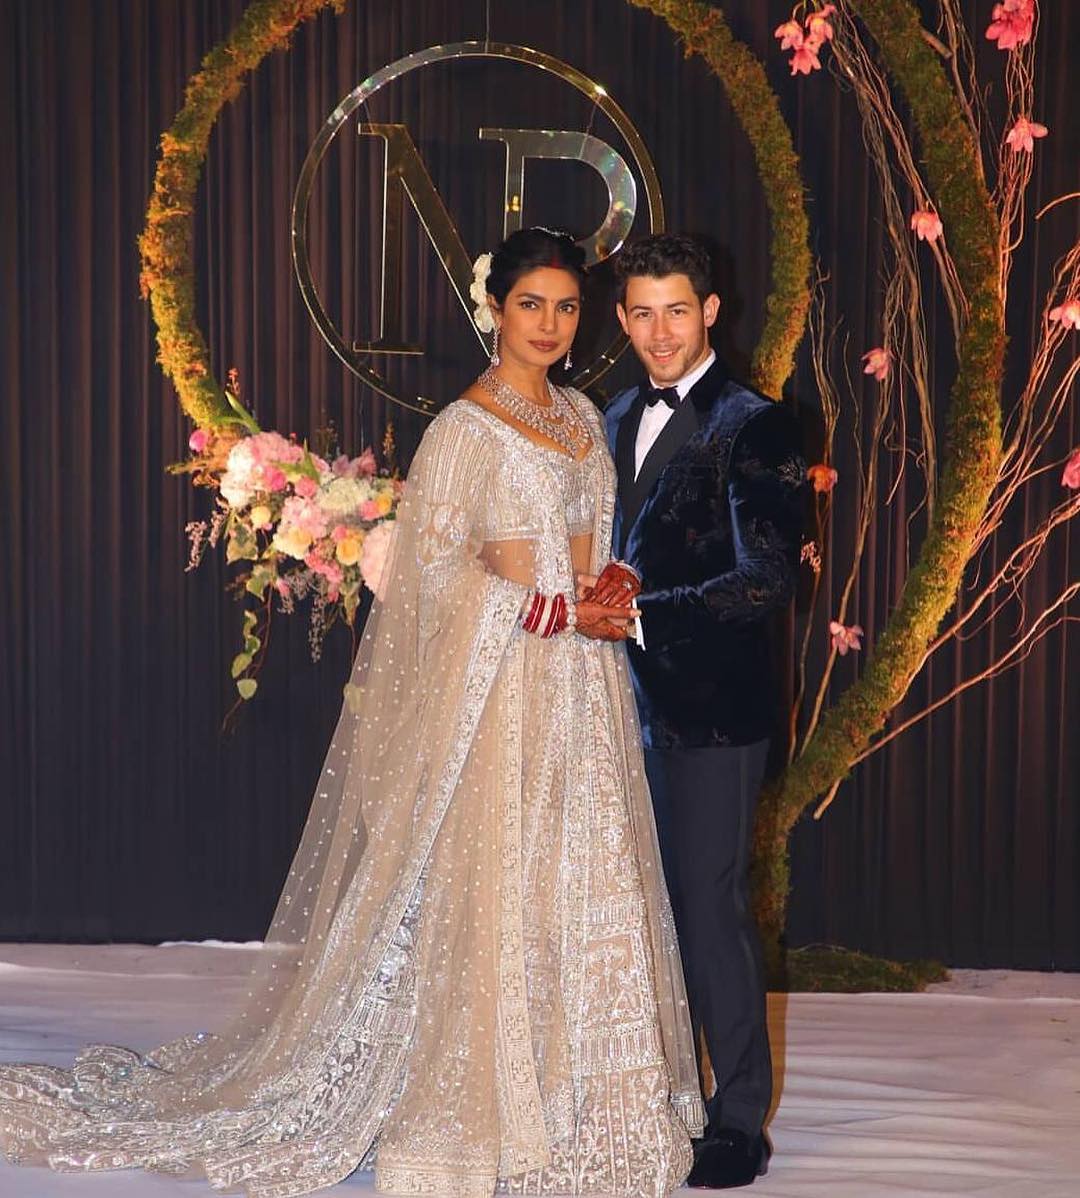 The Reception Pictures Of Priyanka Chopra And Nick Jonas At Taj Palace Are Beyond Beautiful